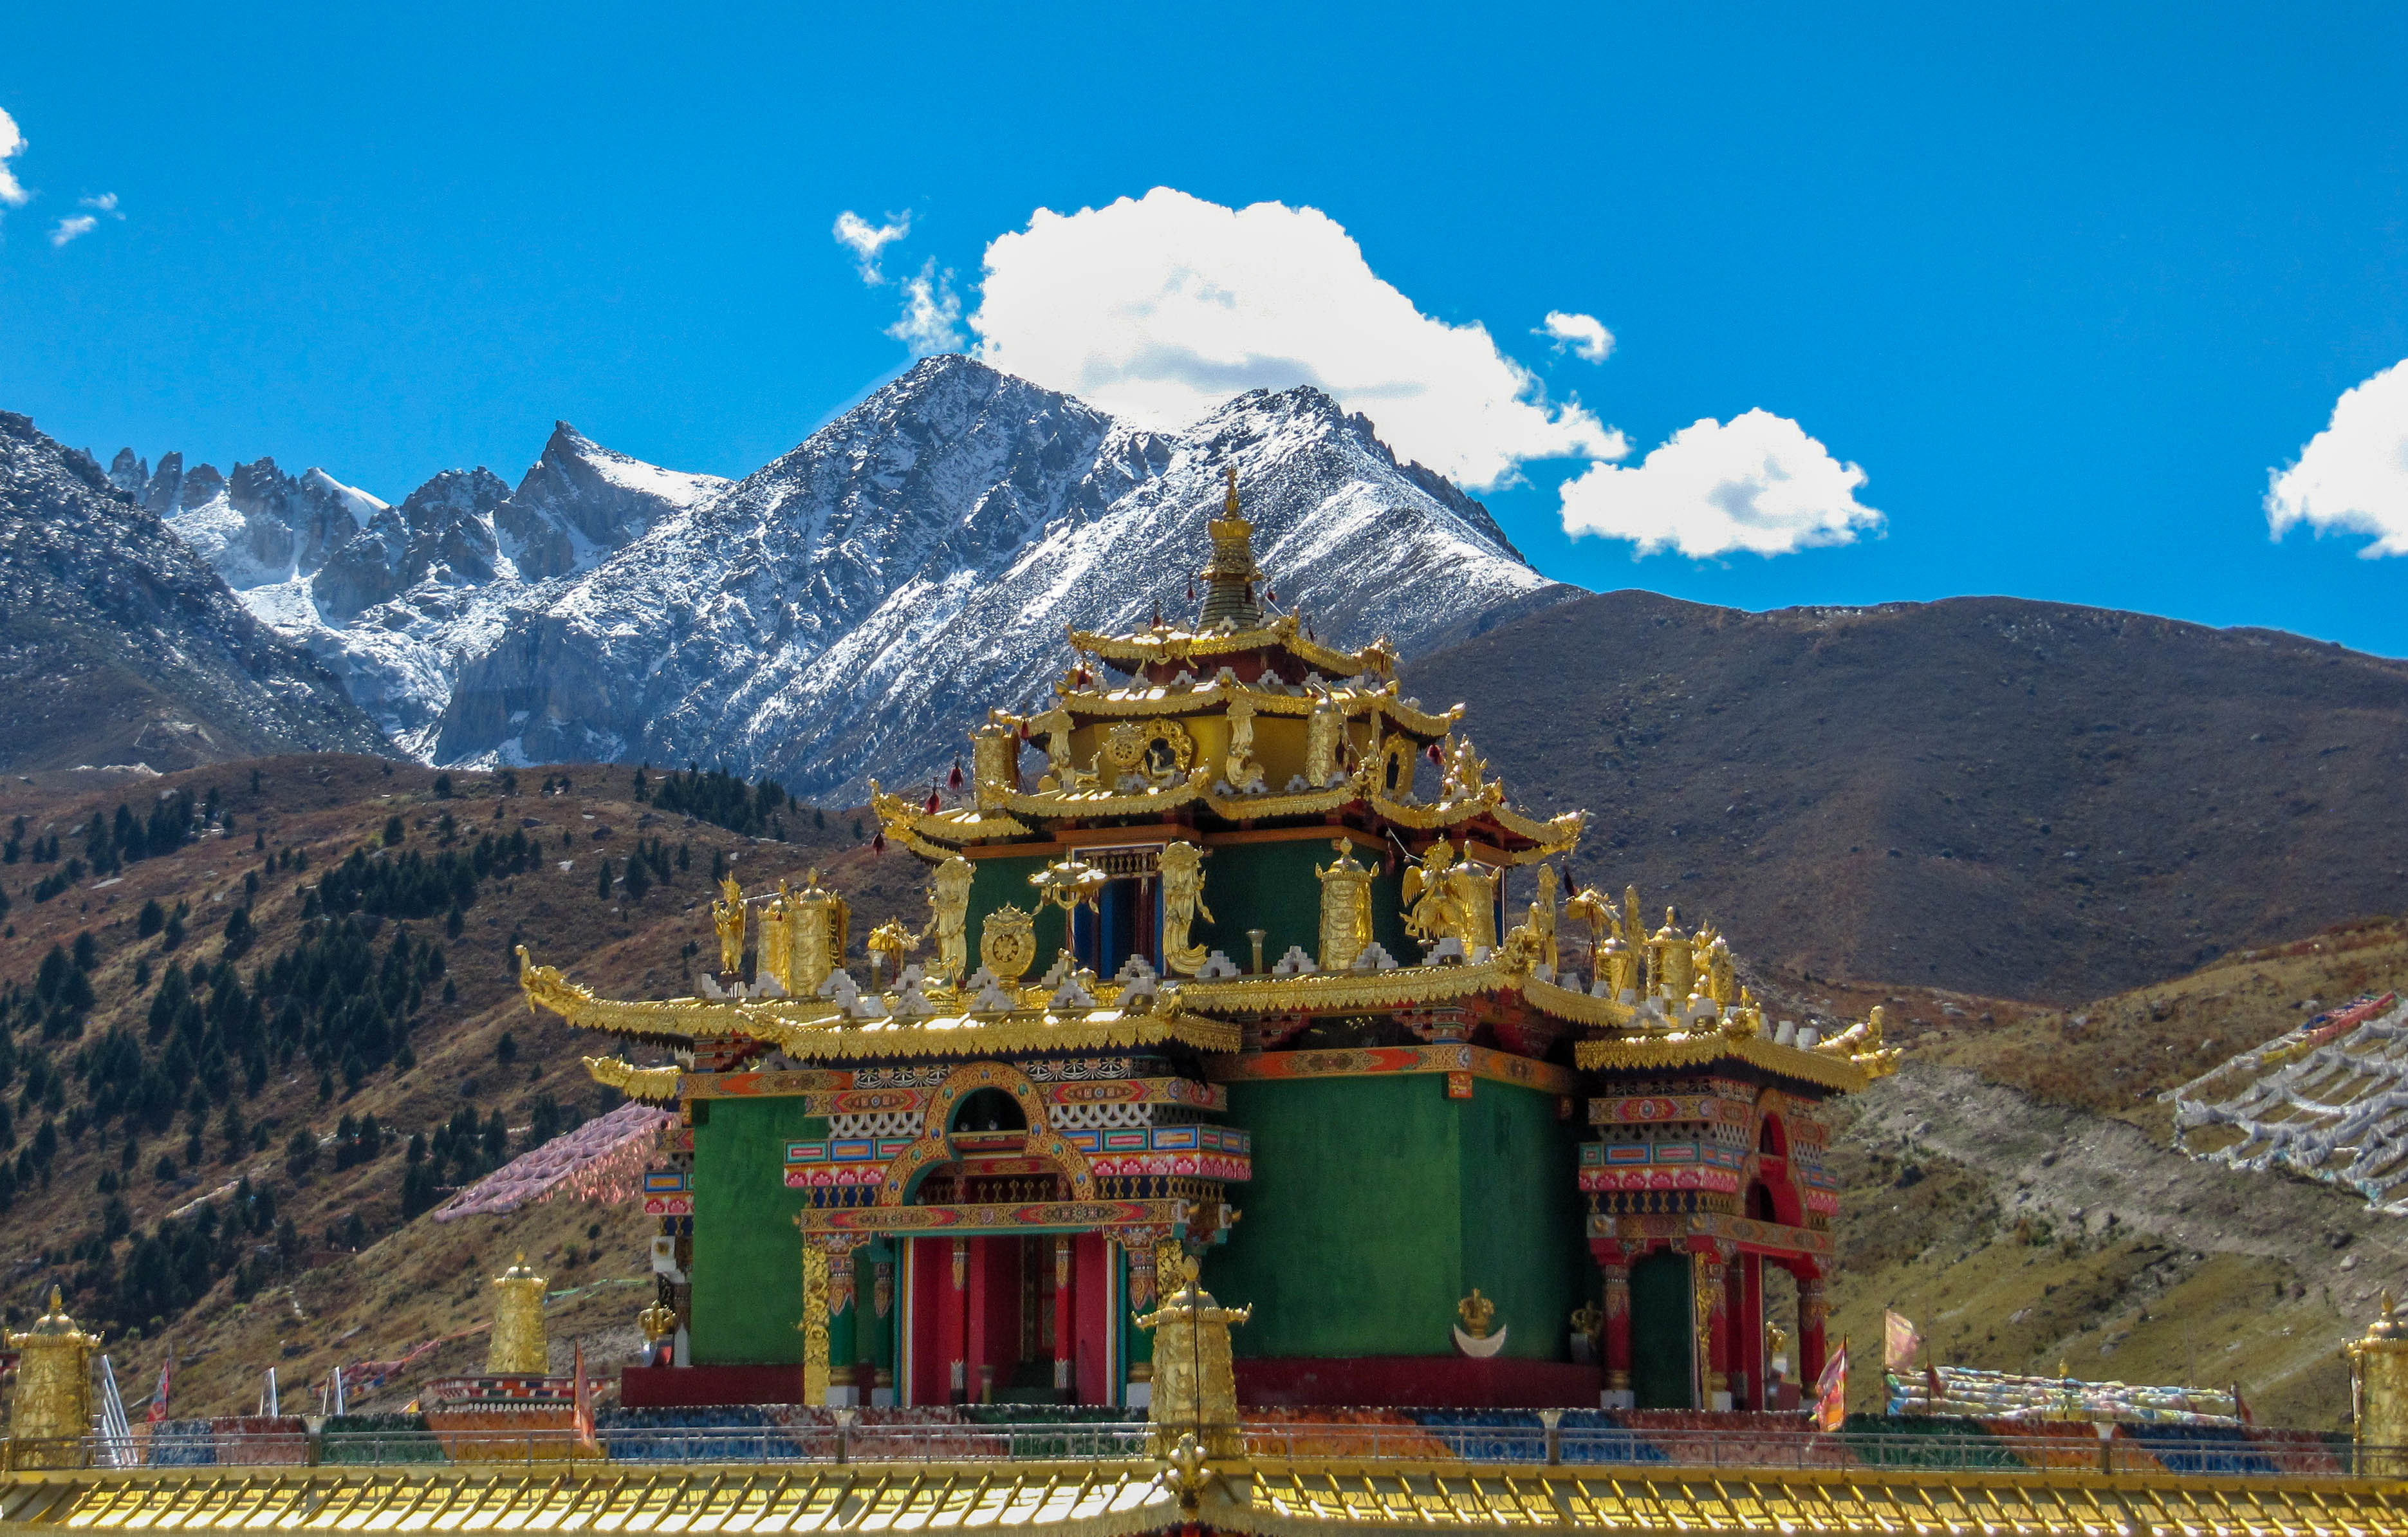 Dzochen monastery mandala Temple in Sichuan Province